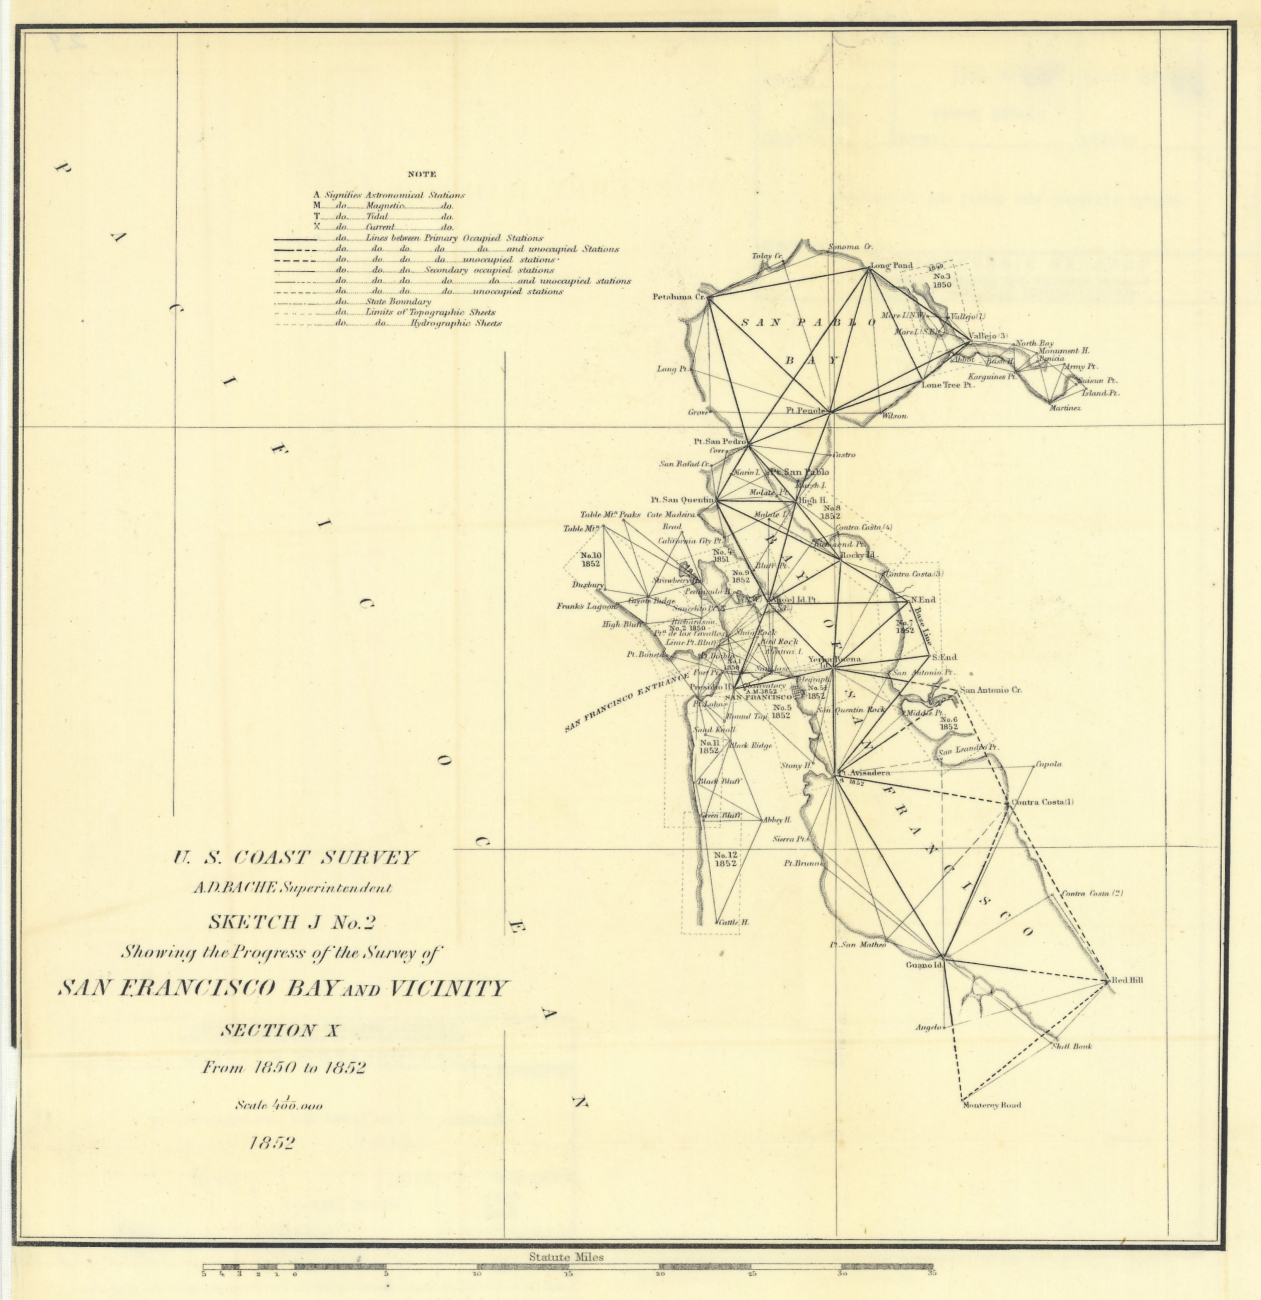 Annual Report 1852